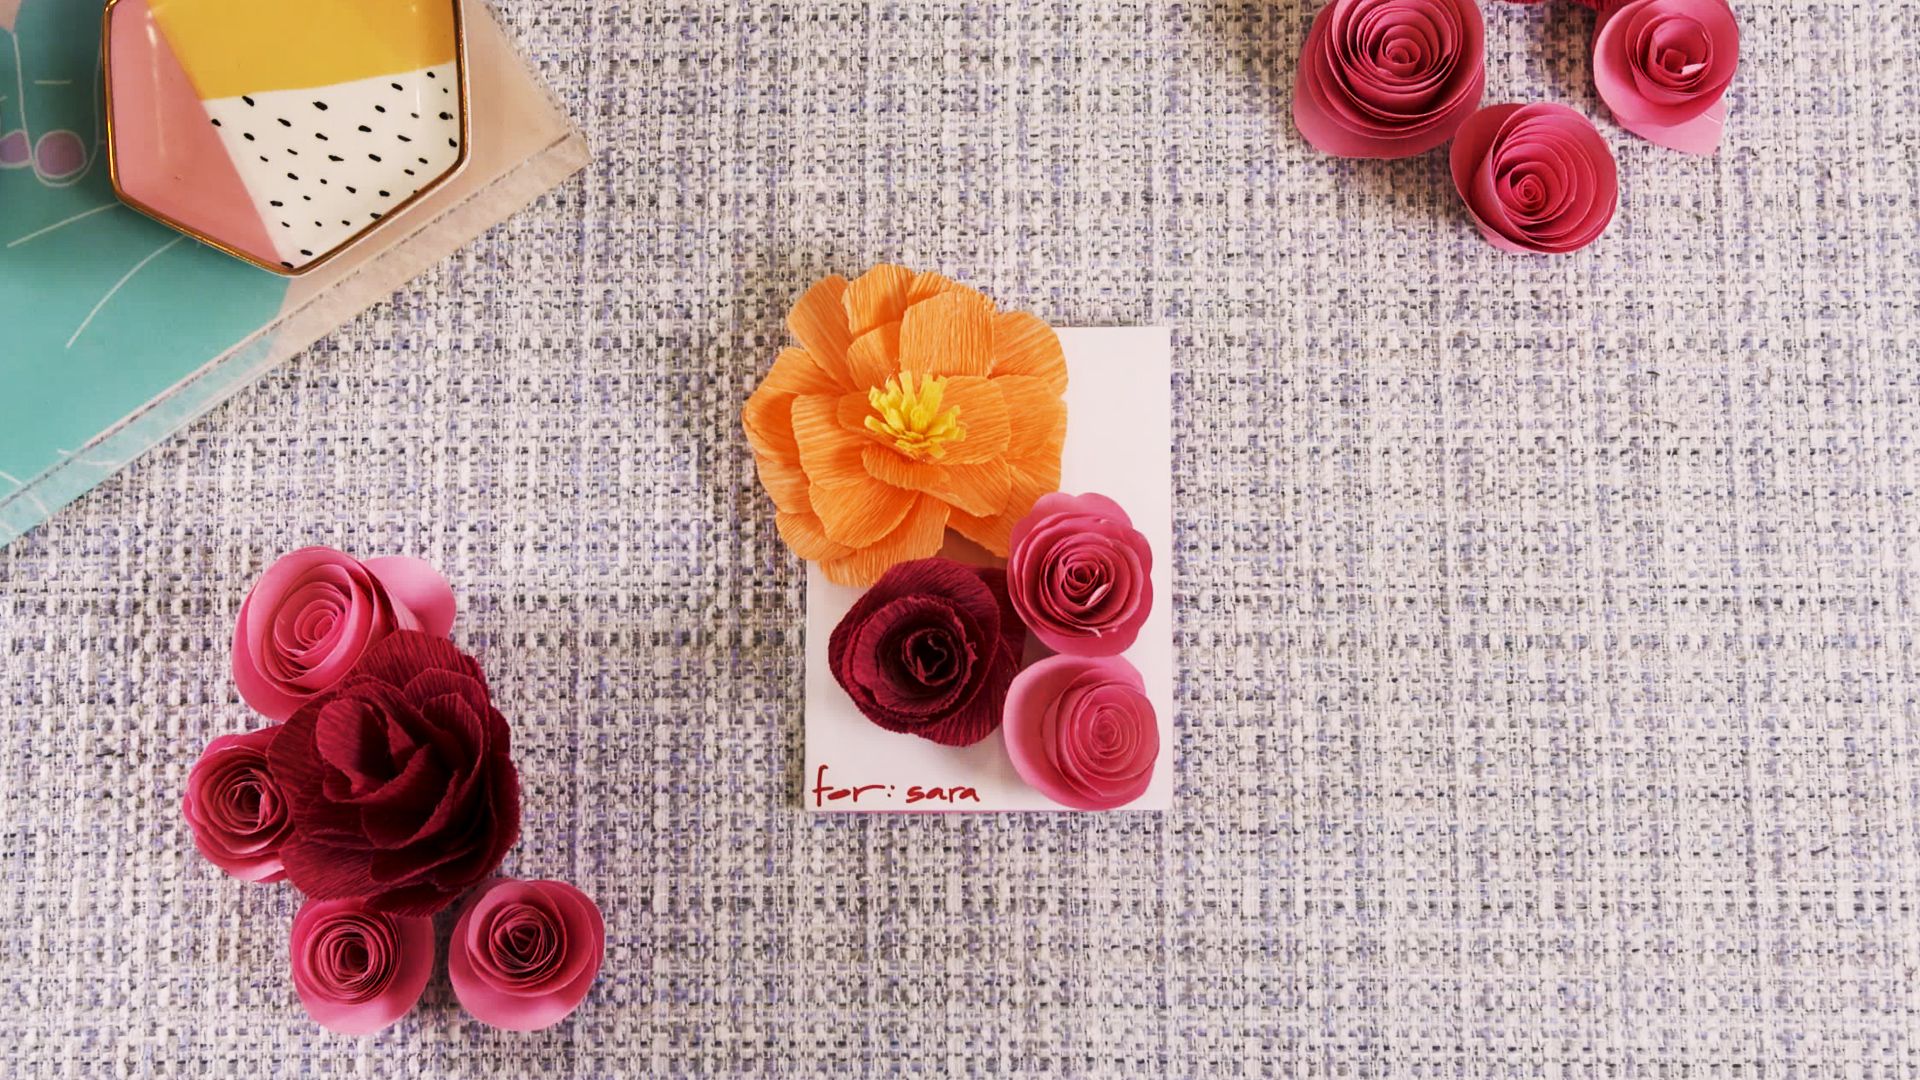 Flower Crochet Kit Red Rose Step-by-step Video Tutorial DIY Home